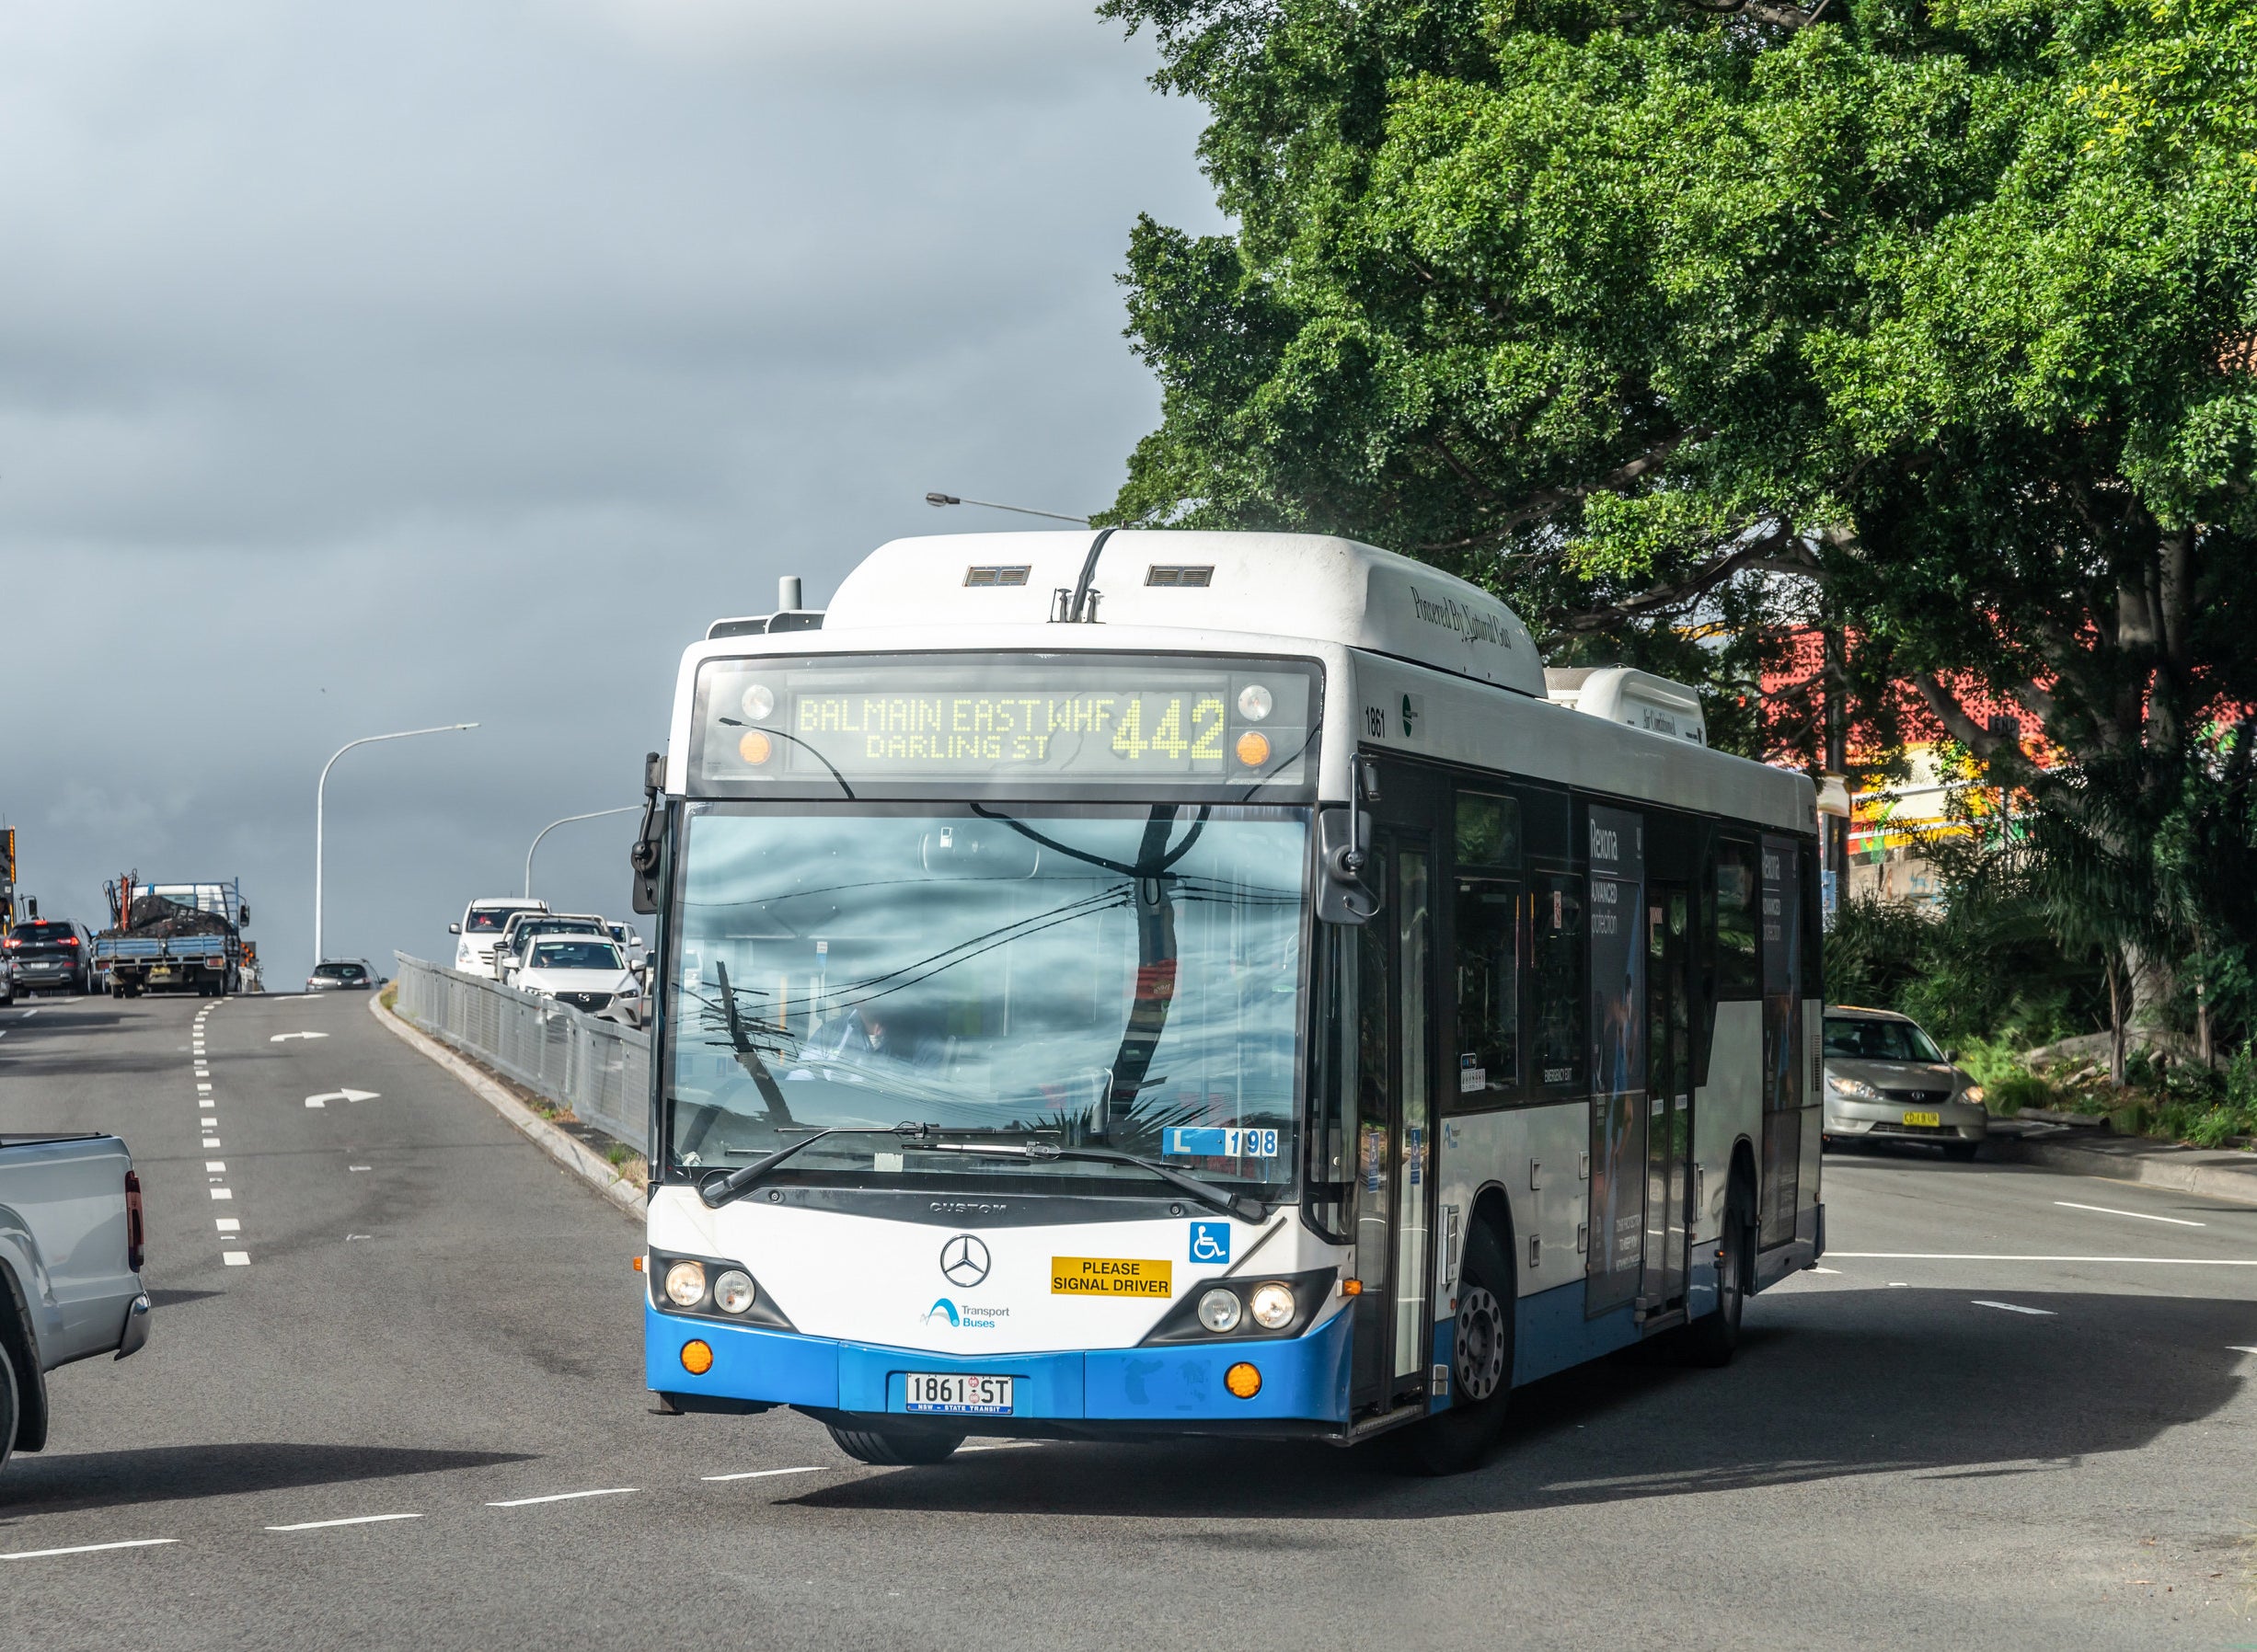 442 bus from Sydney to Balmain